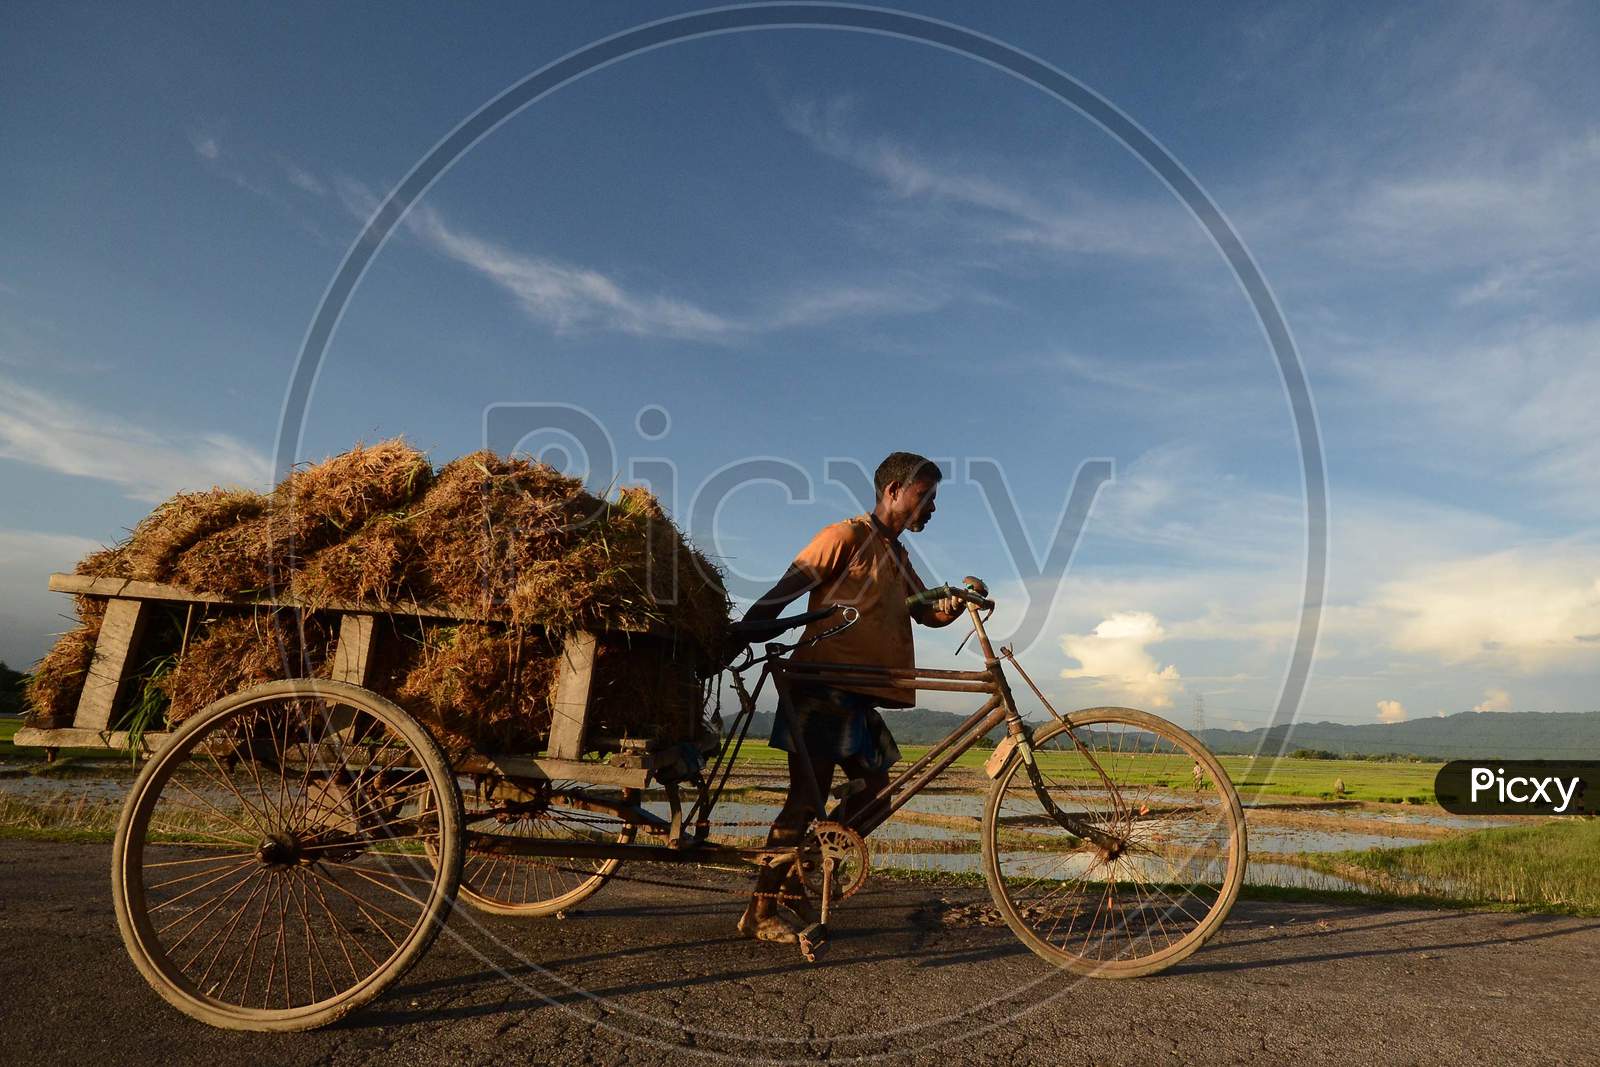 A Farmer Carrying Paddy Sapling Bundles in an Rickshaw At Paddy Harvesting Fields